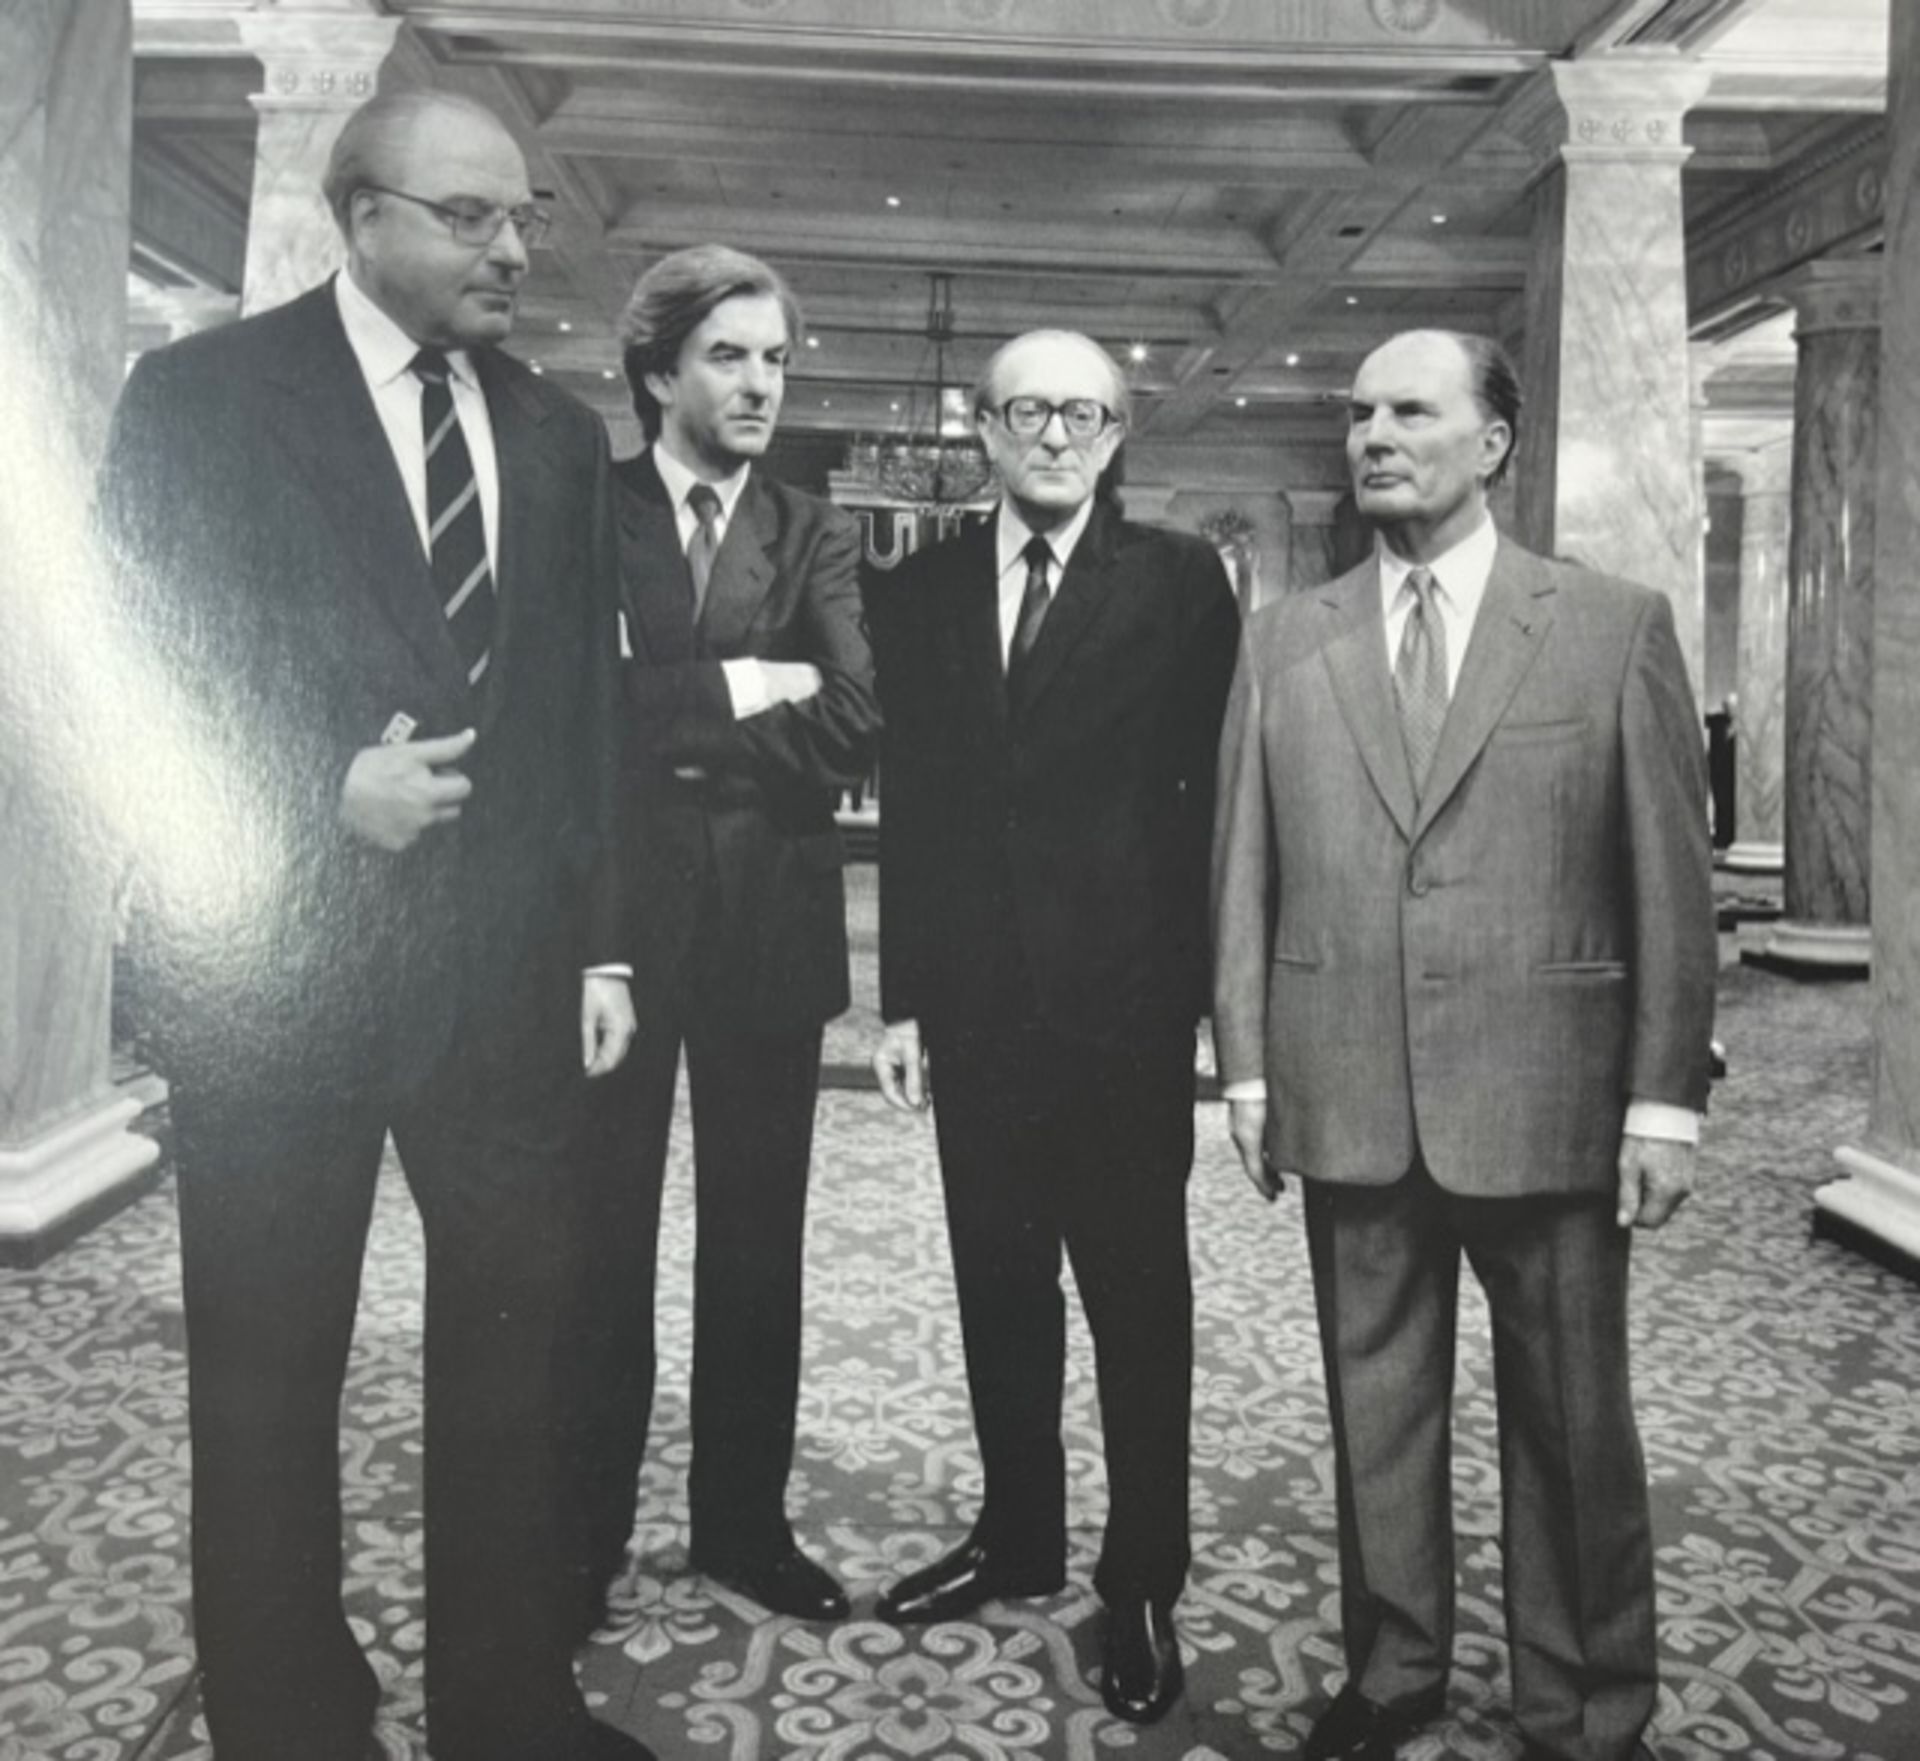 Hiroshi Sugimoto "Dr. Helmut Kohl, Ruud Lubers, Lord Carrington, Francois Mitterand" Print.